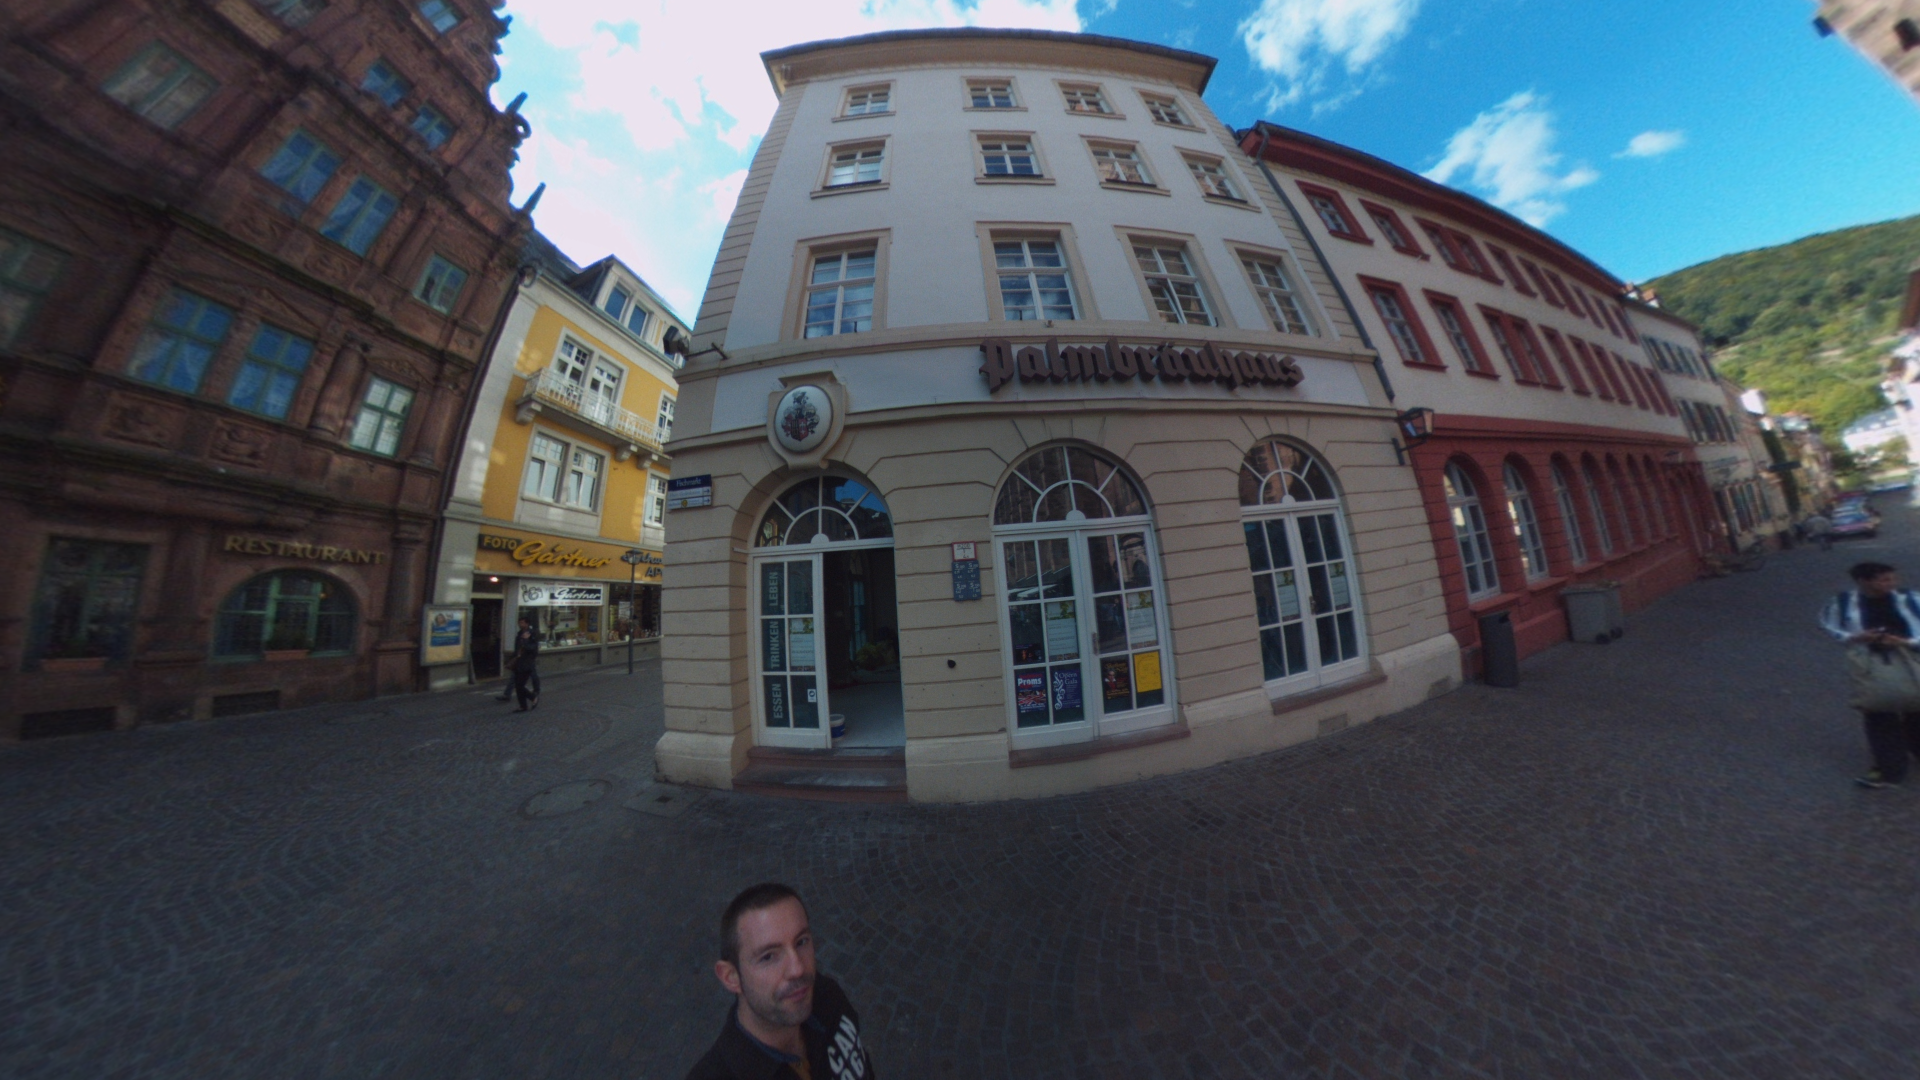 Fotos 360 Restaurante Palmbräuhaus de #Heidelberg. #VidePan por #Frankfurt